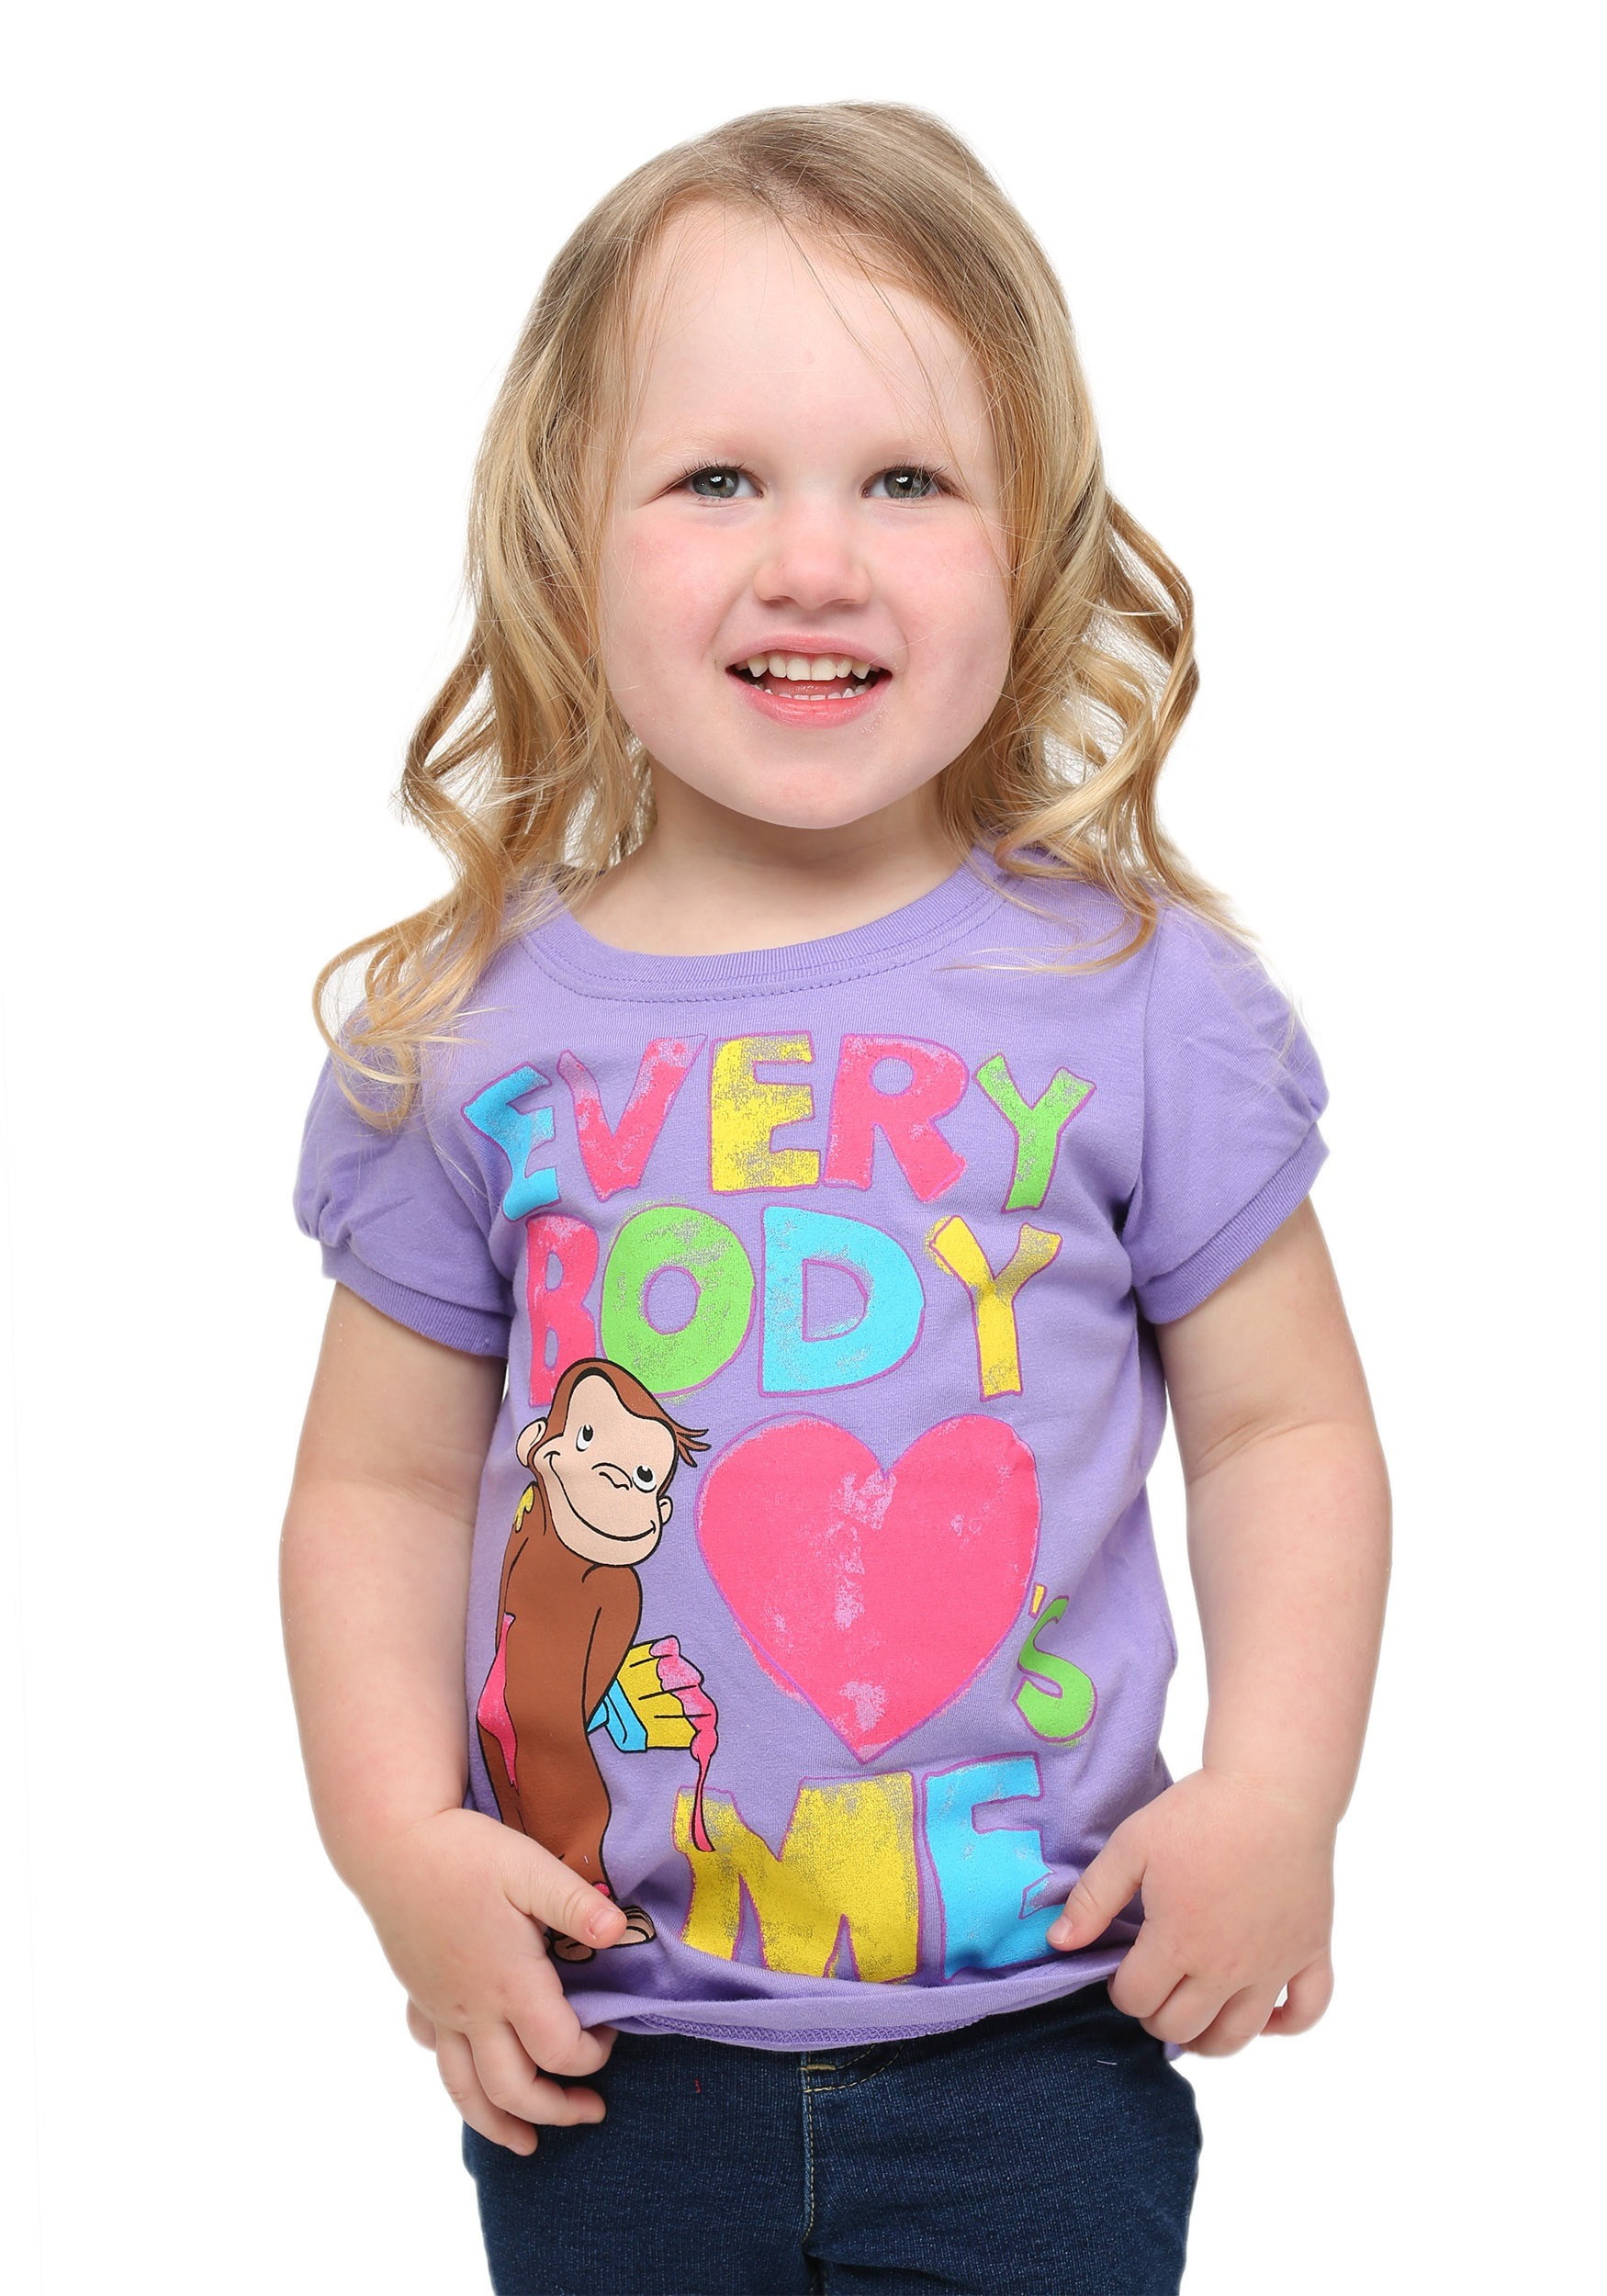 Curious George Baby-Girls Toddler Girls Short Sleeve Tee Shirt